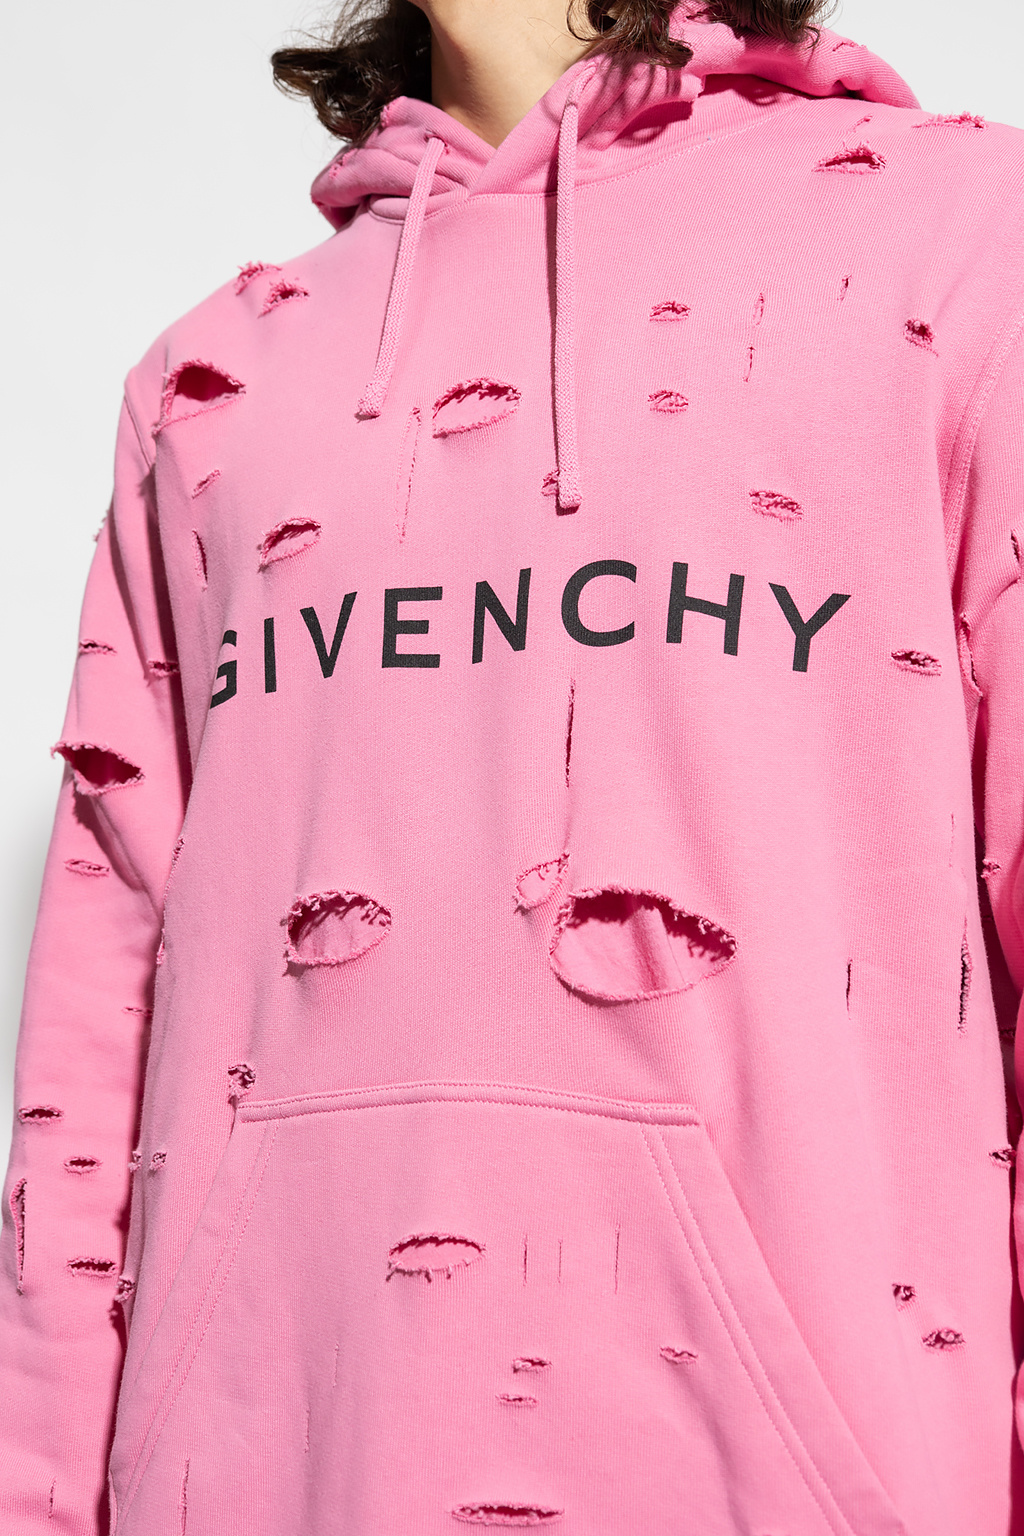 Givenchy Givenchy classic palazzo pants